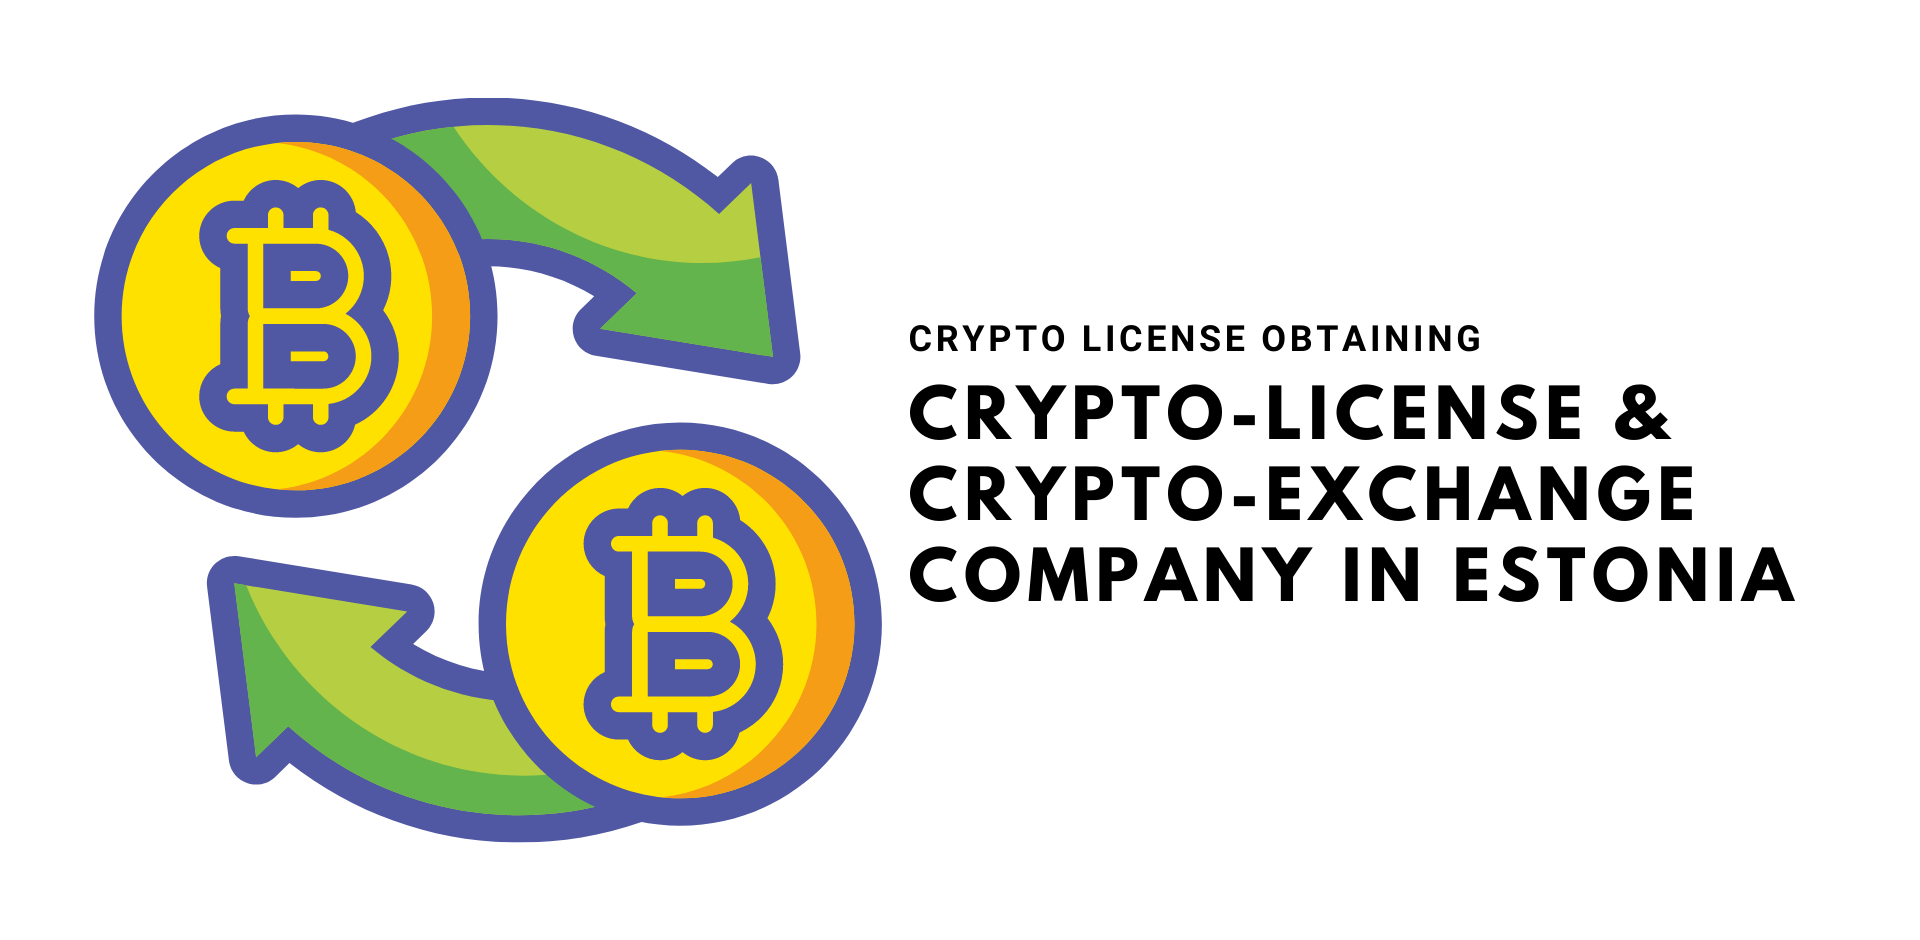 Crypto-License & Crypto-Exchange Company in Estonia